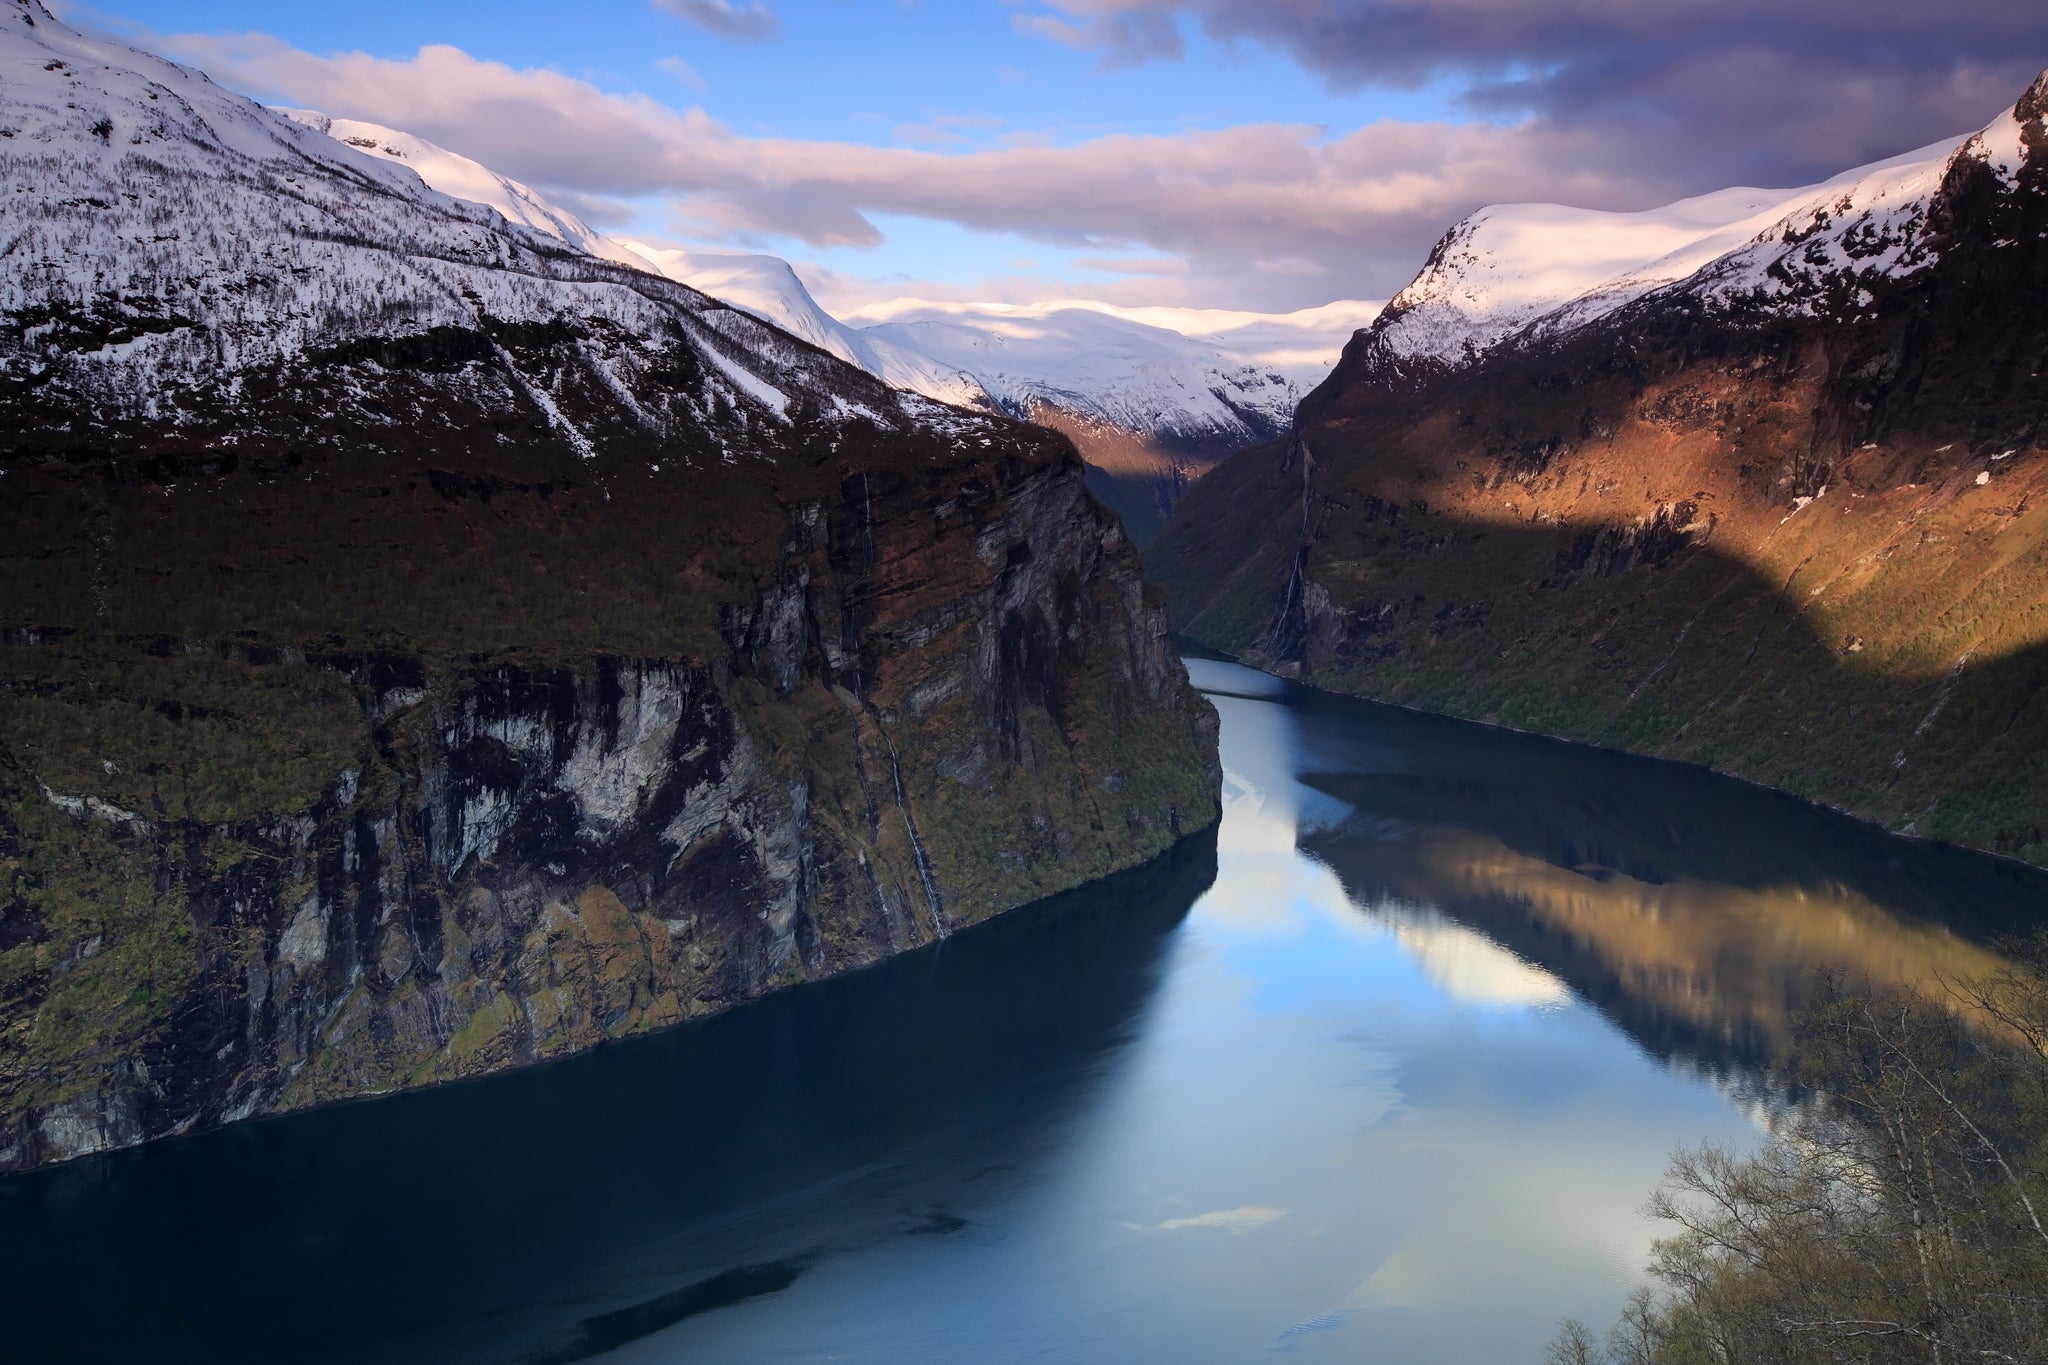 The Geiranger fjord 